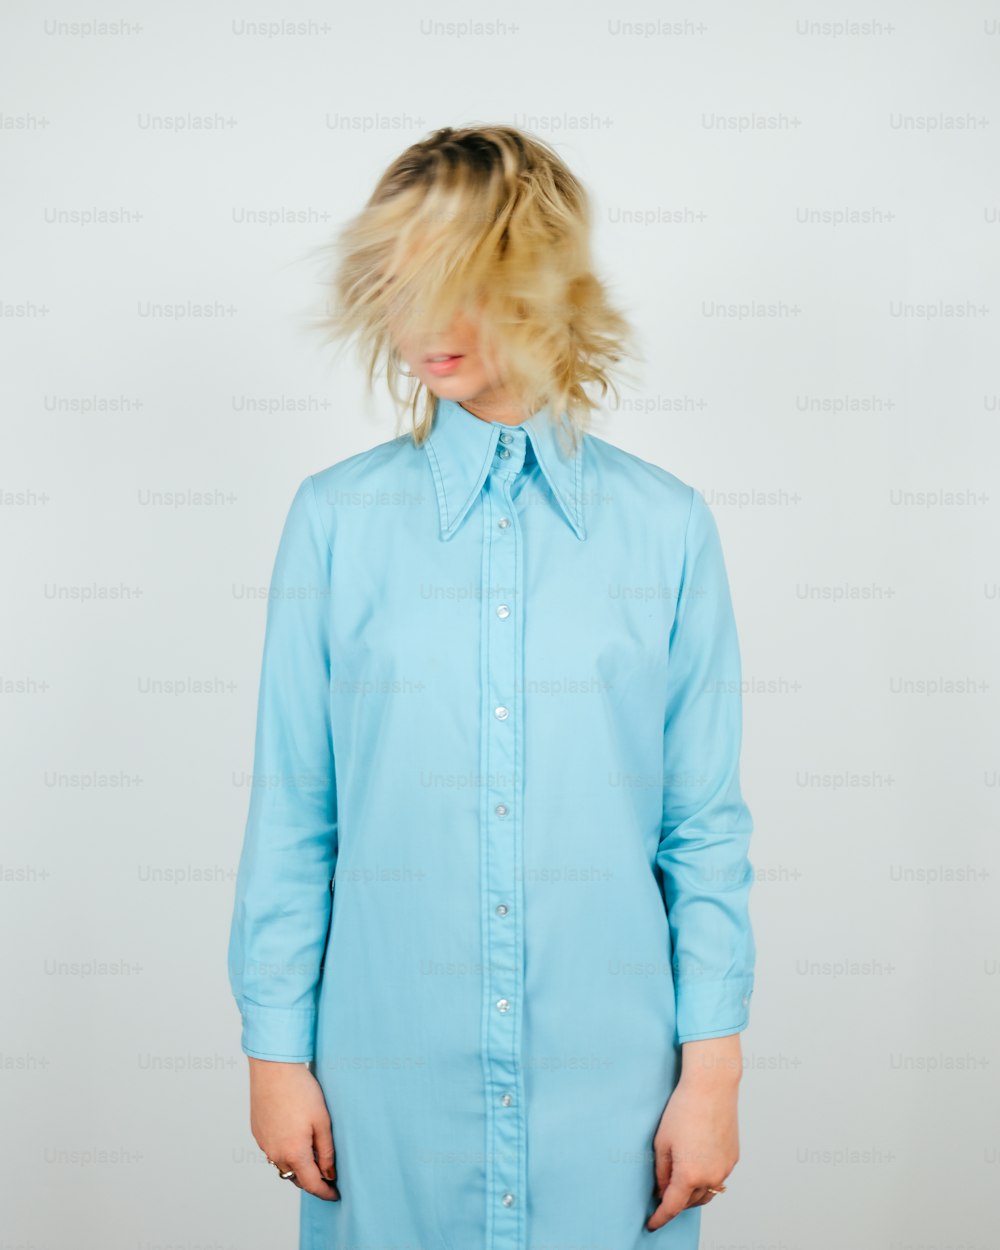 a woman with blonde hair wearing a blue shirt dress